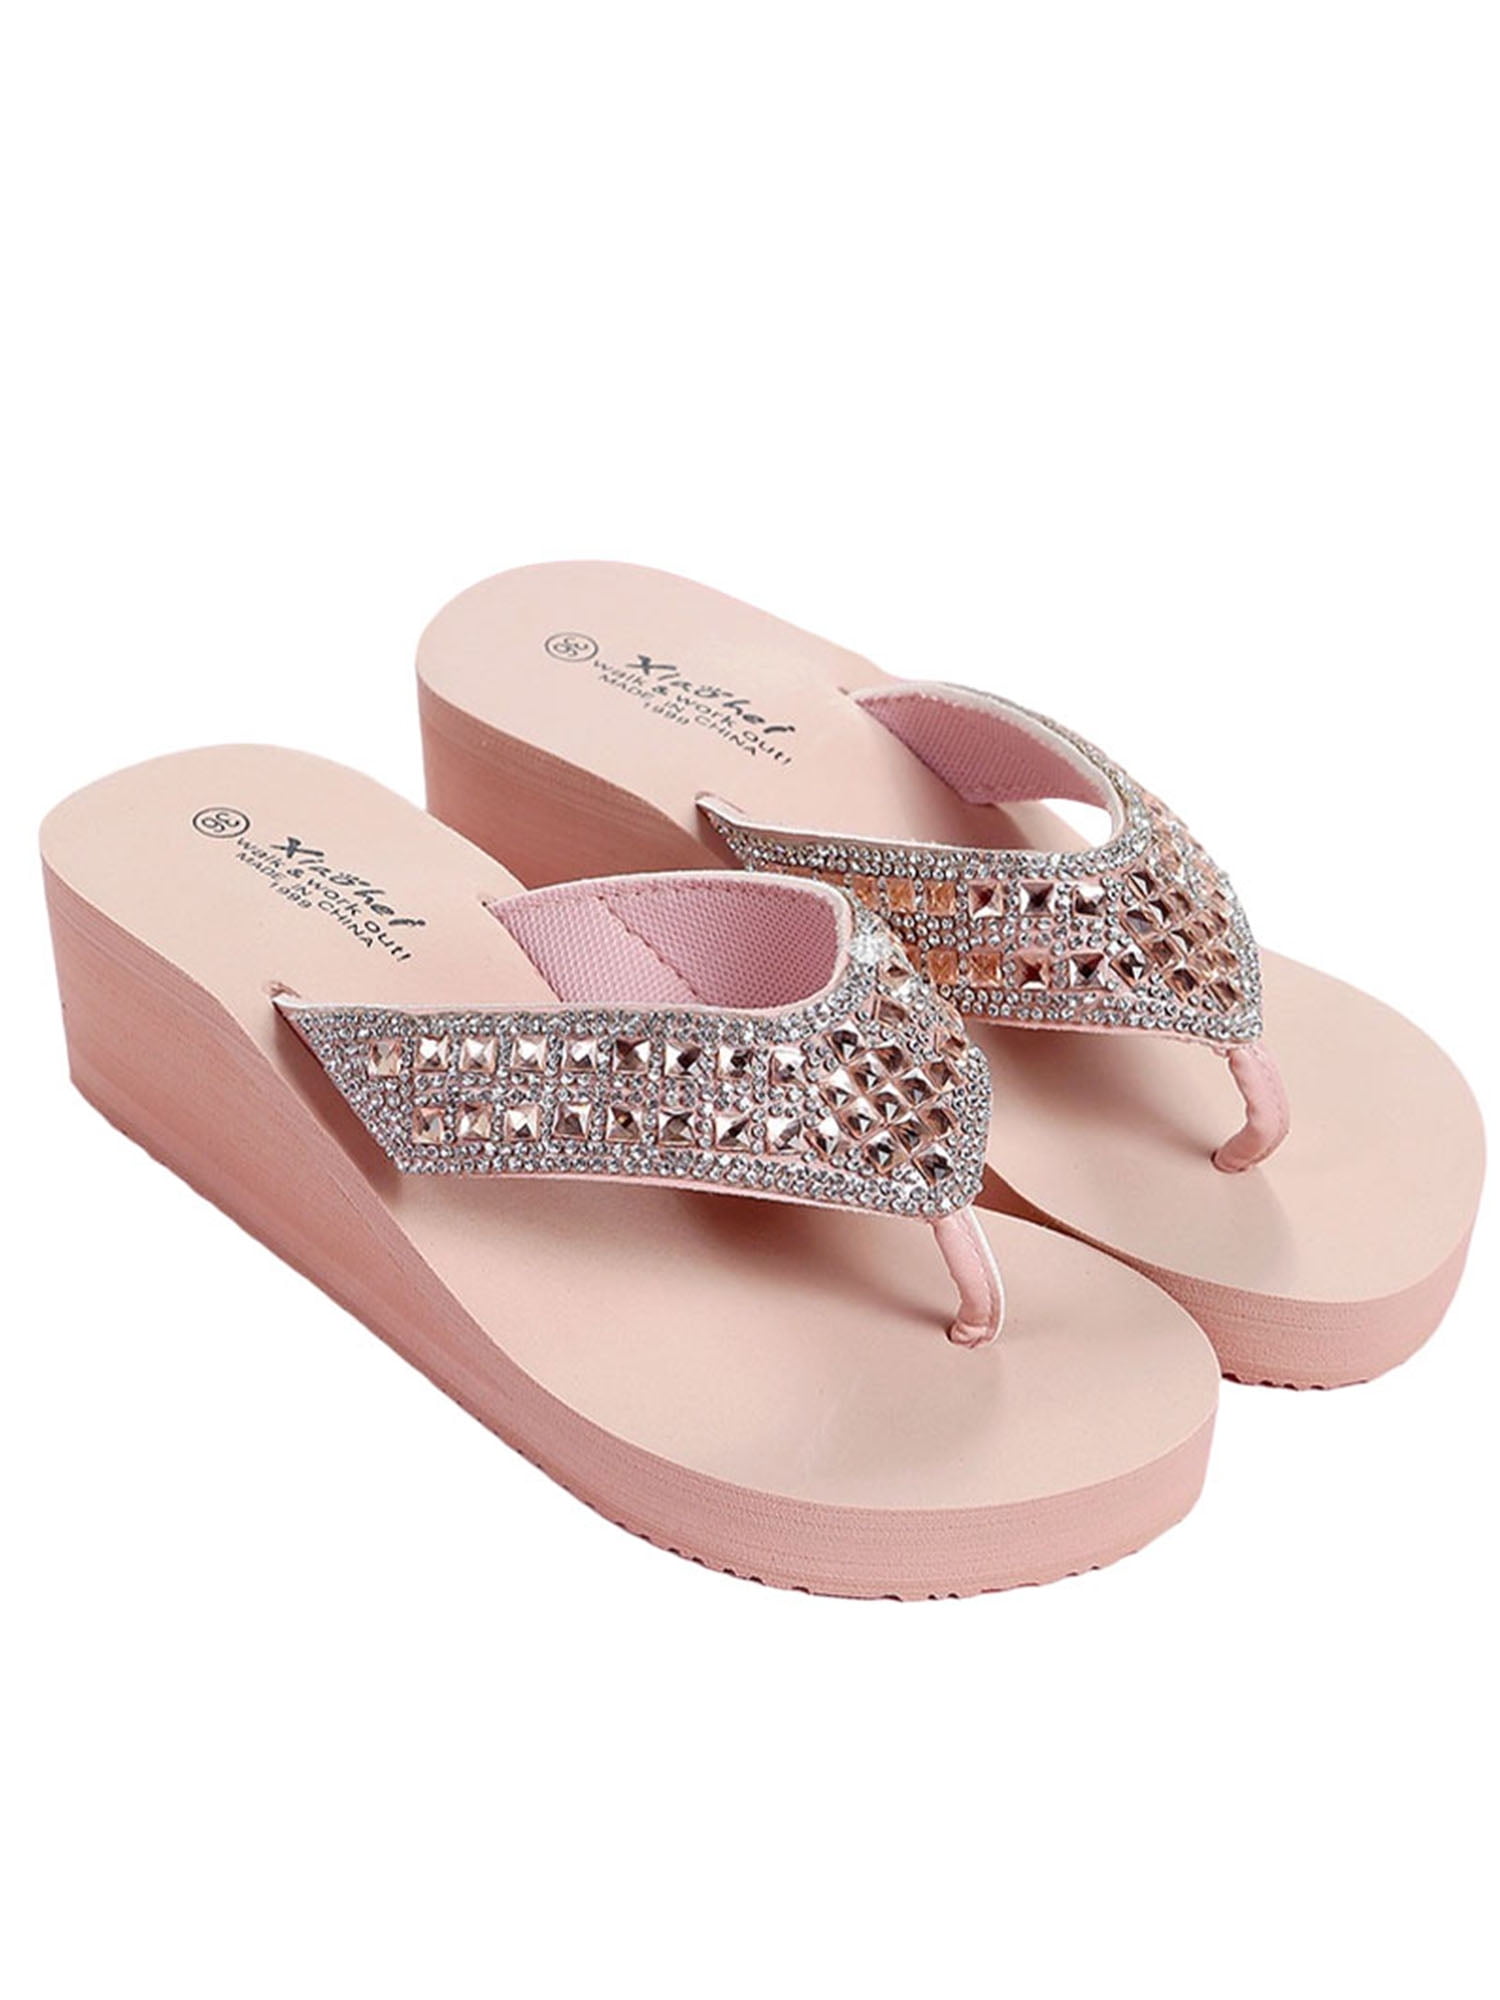 Flip Flops Summer Womens  Platform Wedge High Heels  Rhinestone   Shoes  Sandals 